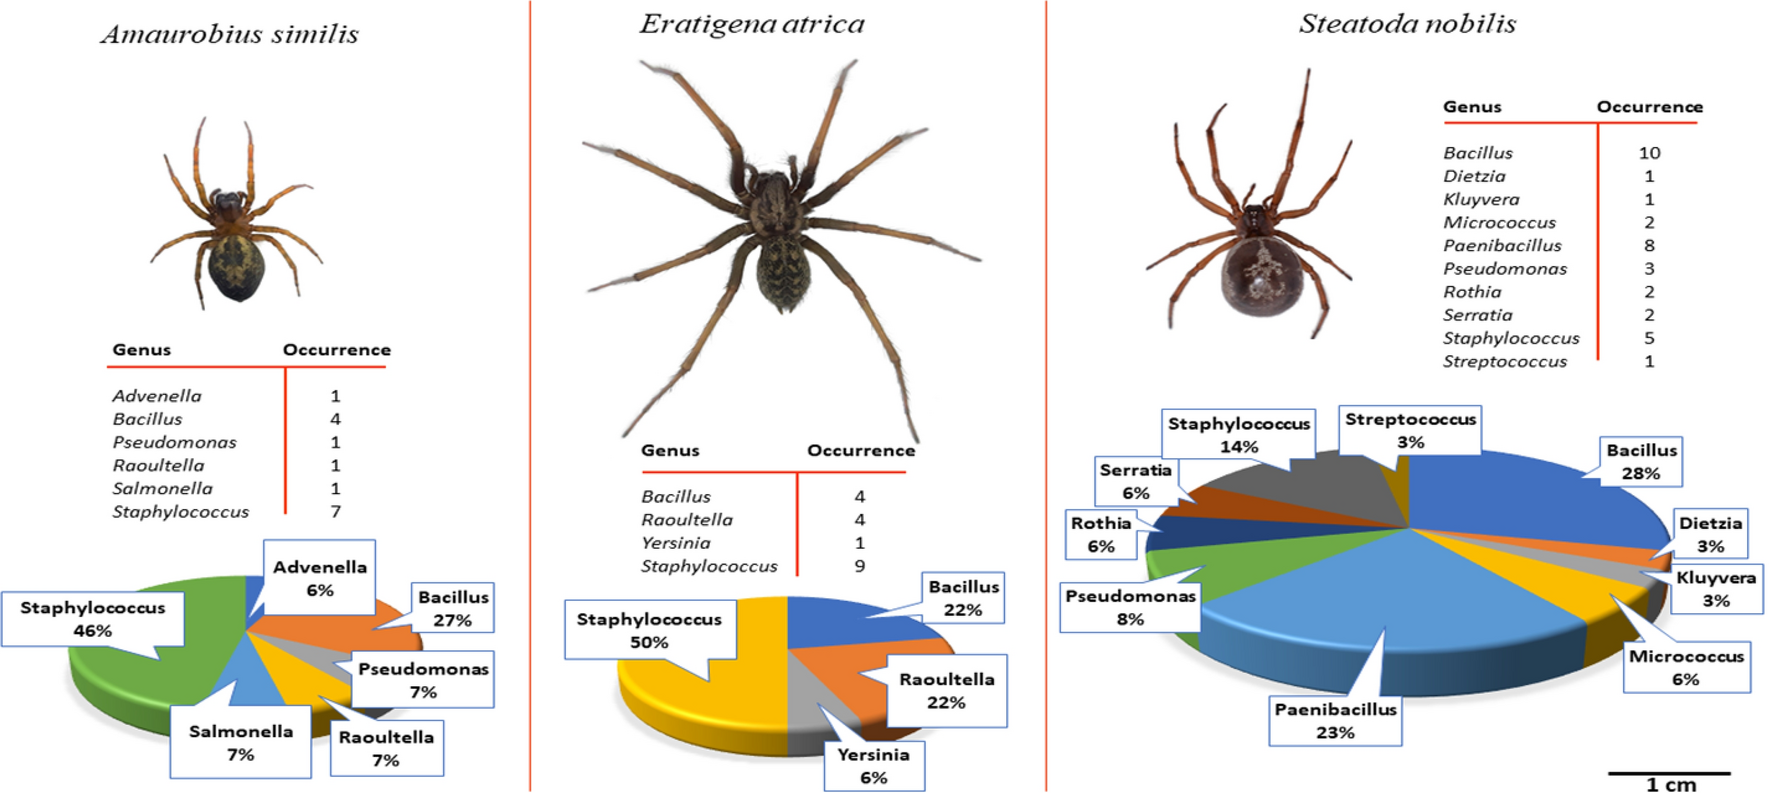 Brown Widow Spider  Center for Invasive Species Research